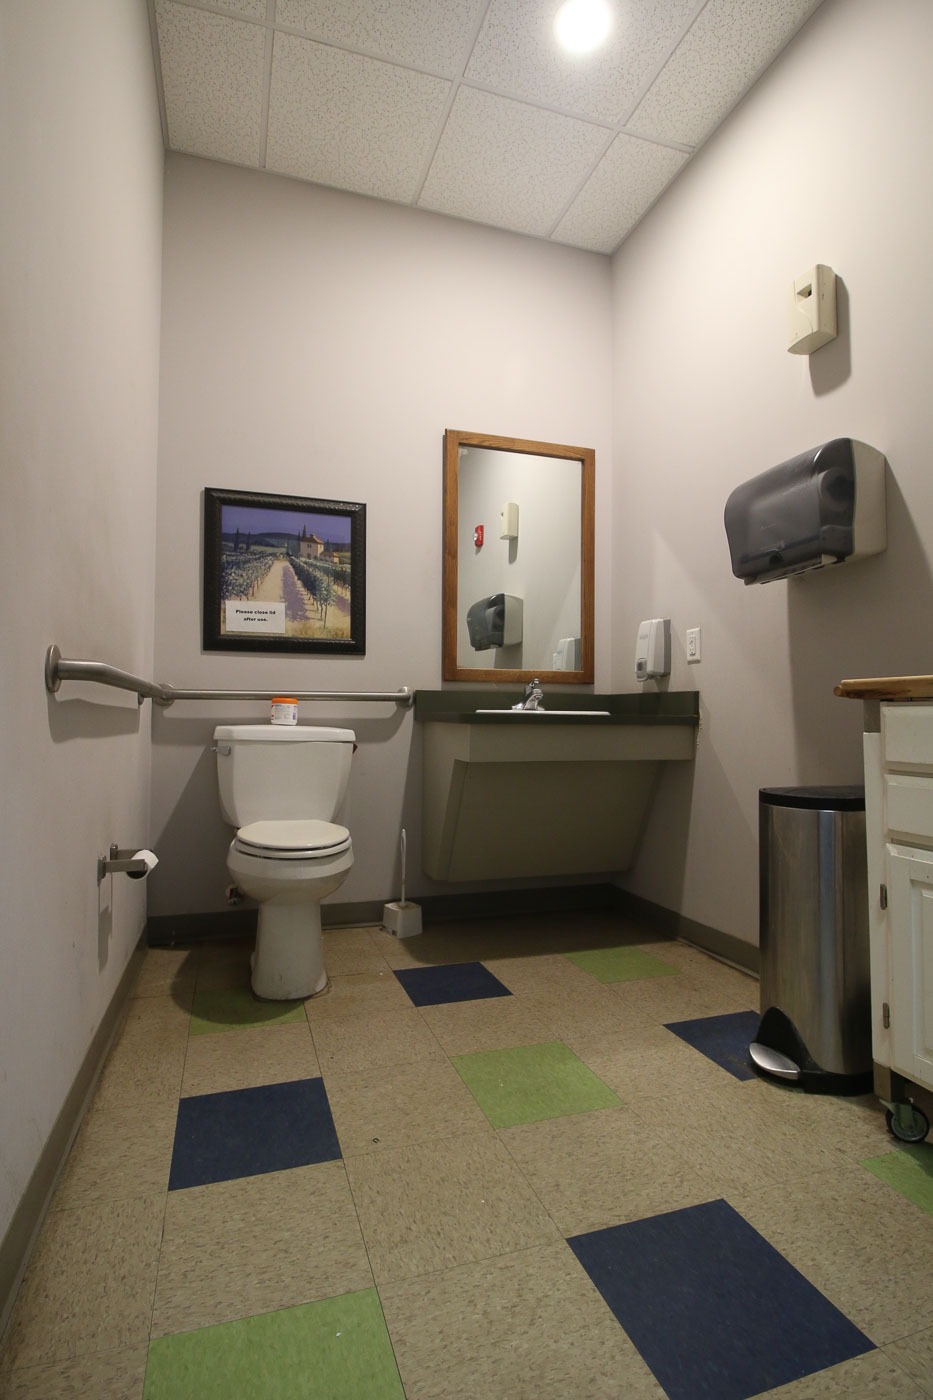 Habitat for Humanity Bathroom Renovations